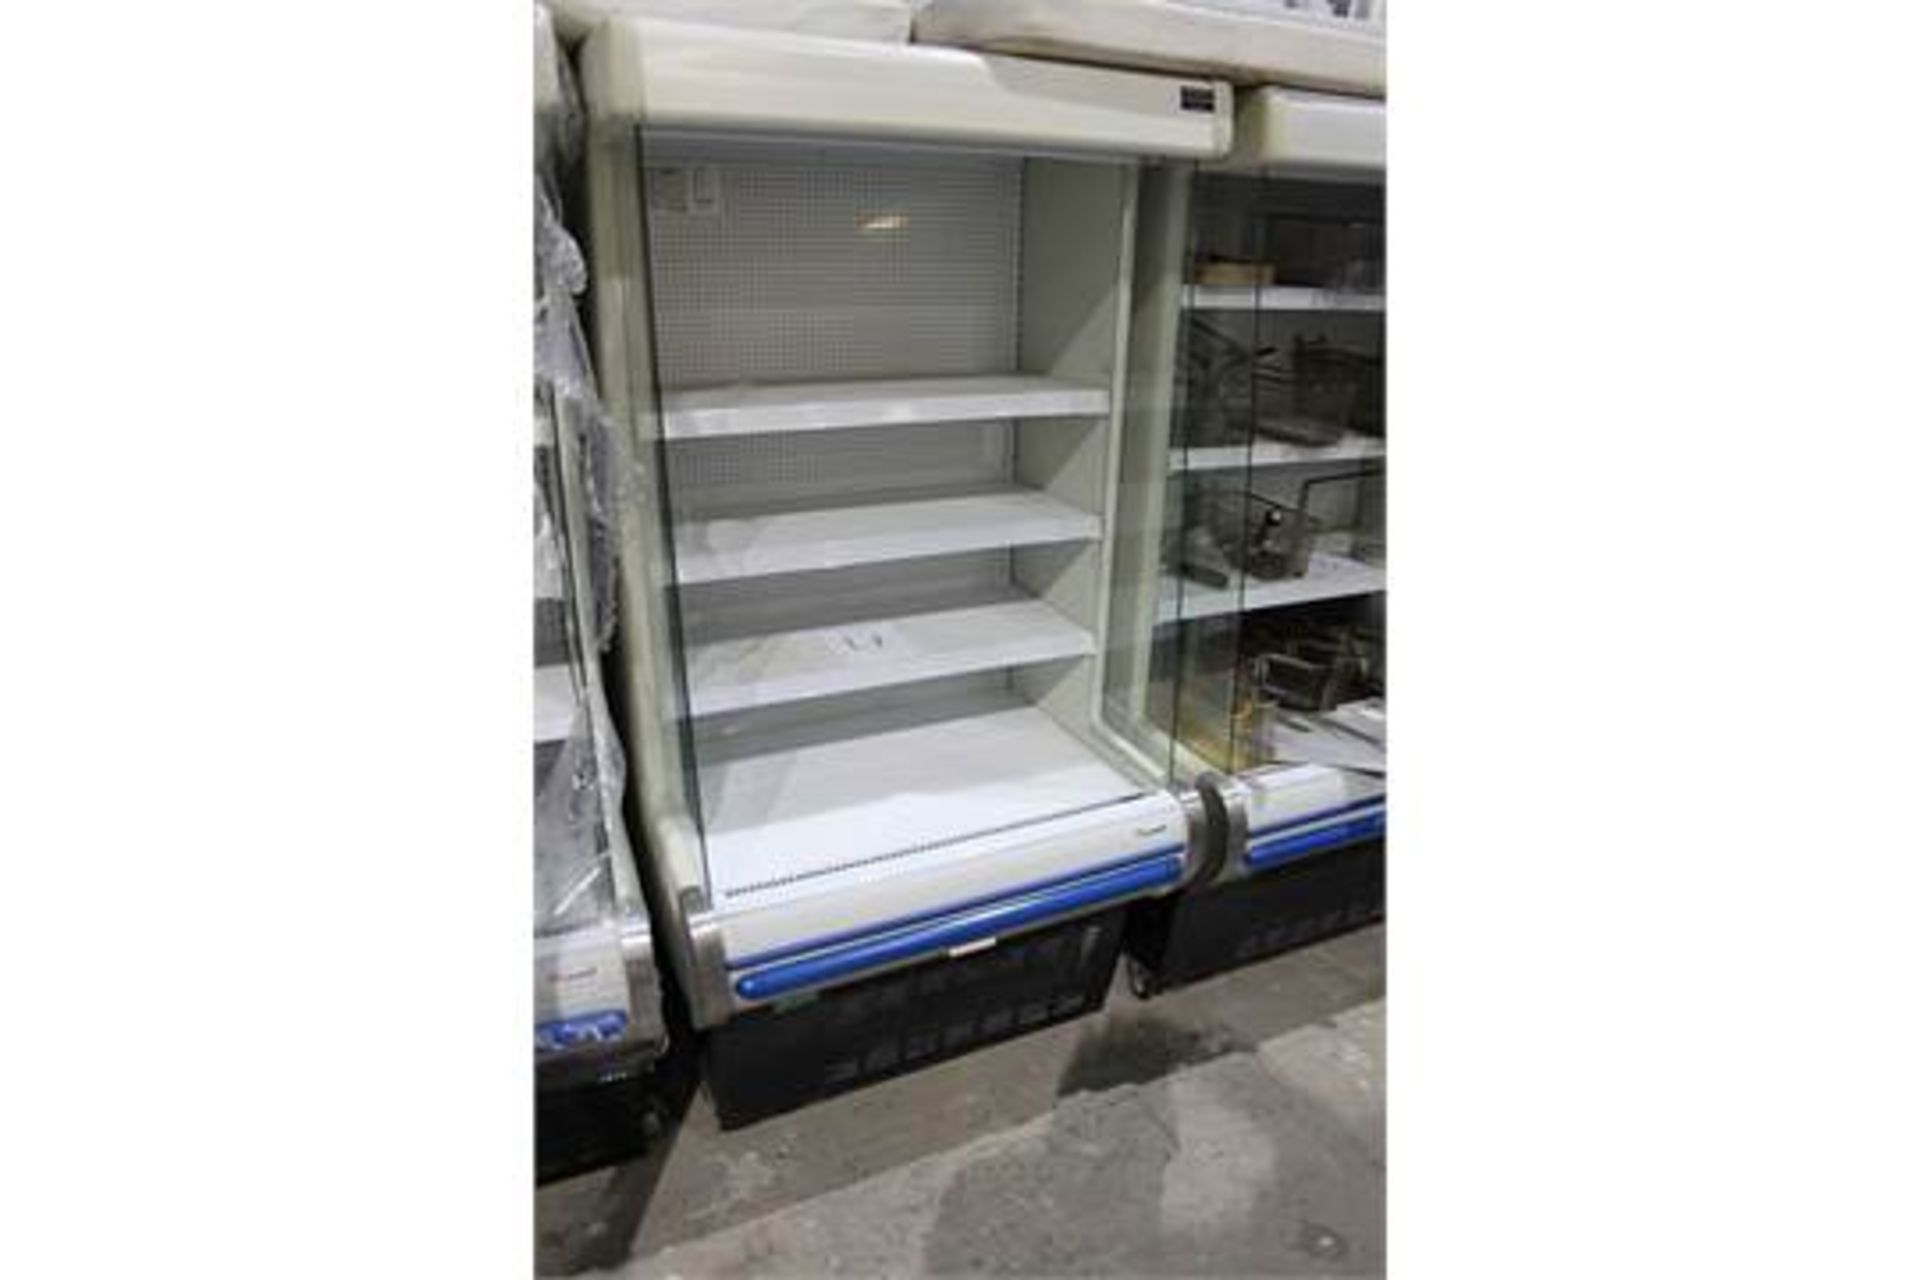 Koxka M10 CUK Multideck 396 litre capacity refrigerated mobile with internal shelves illumination